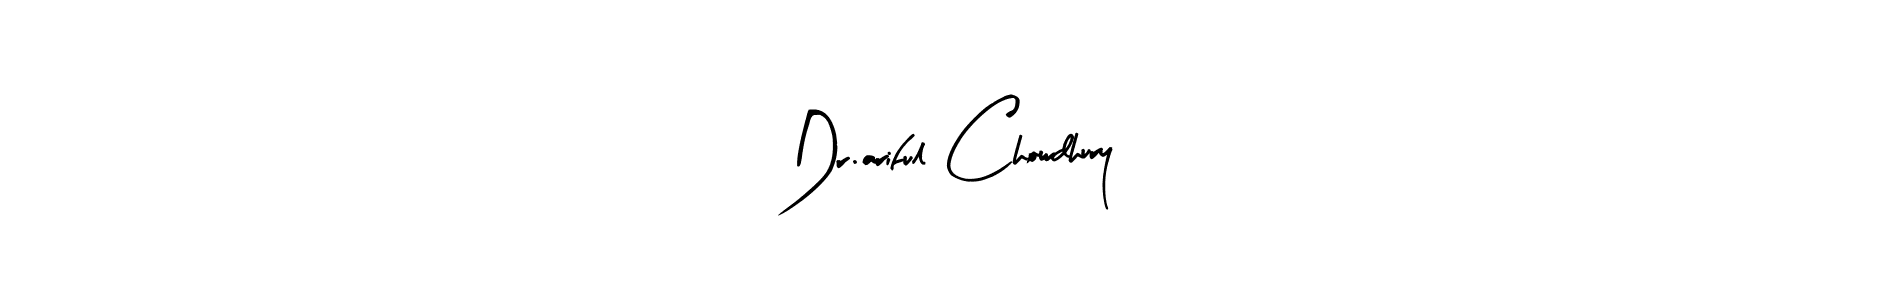 How to Draw Dr.ariful Chowdhury signature style? Arty Signature is a latest design signature styles for name Dr.ariful Chowdhury. Dr.ariful Chowdhury signature style 8 images and pictures png